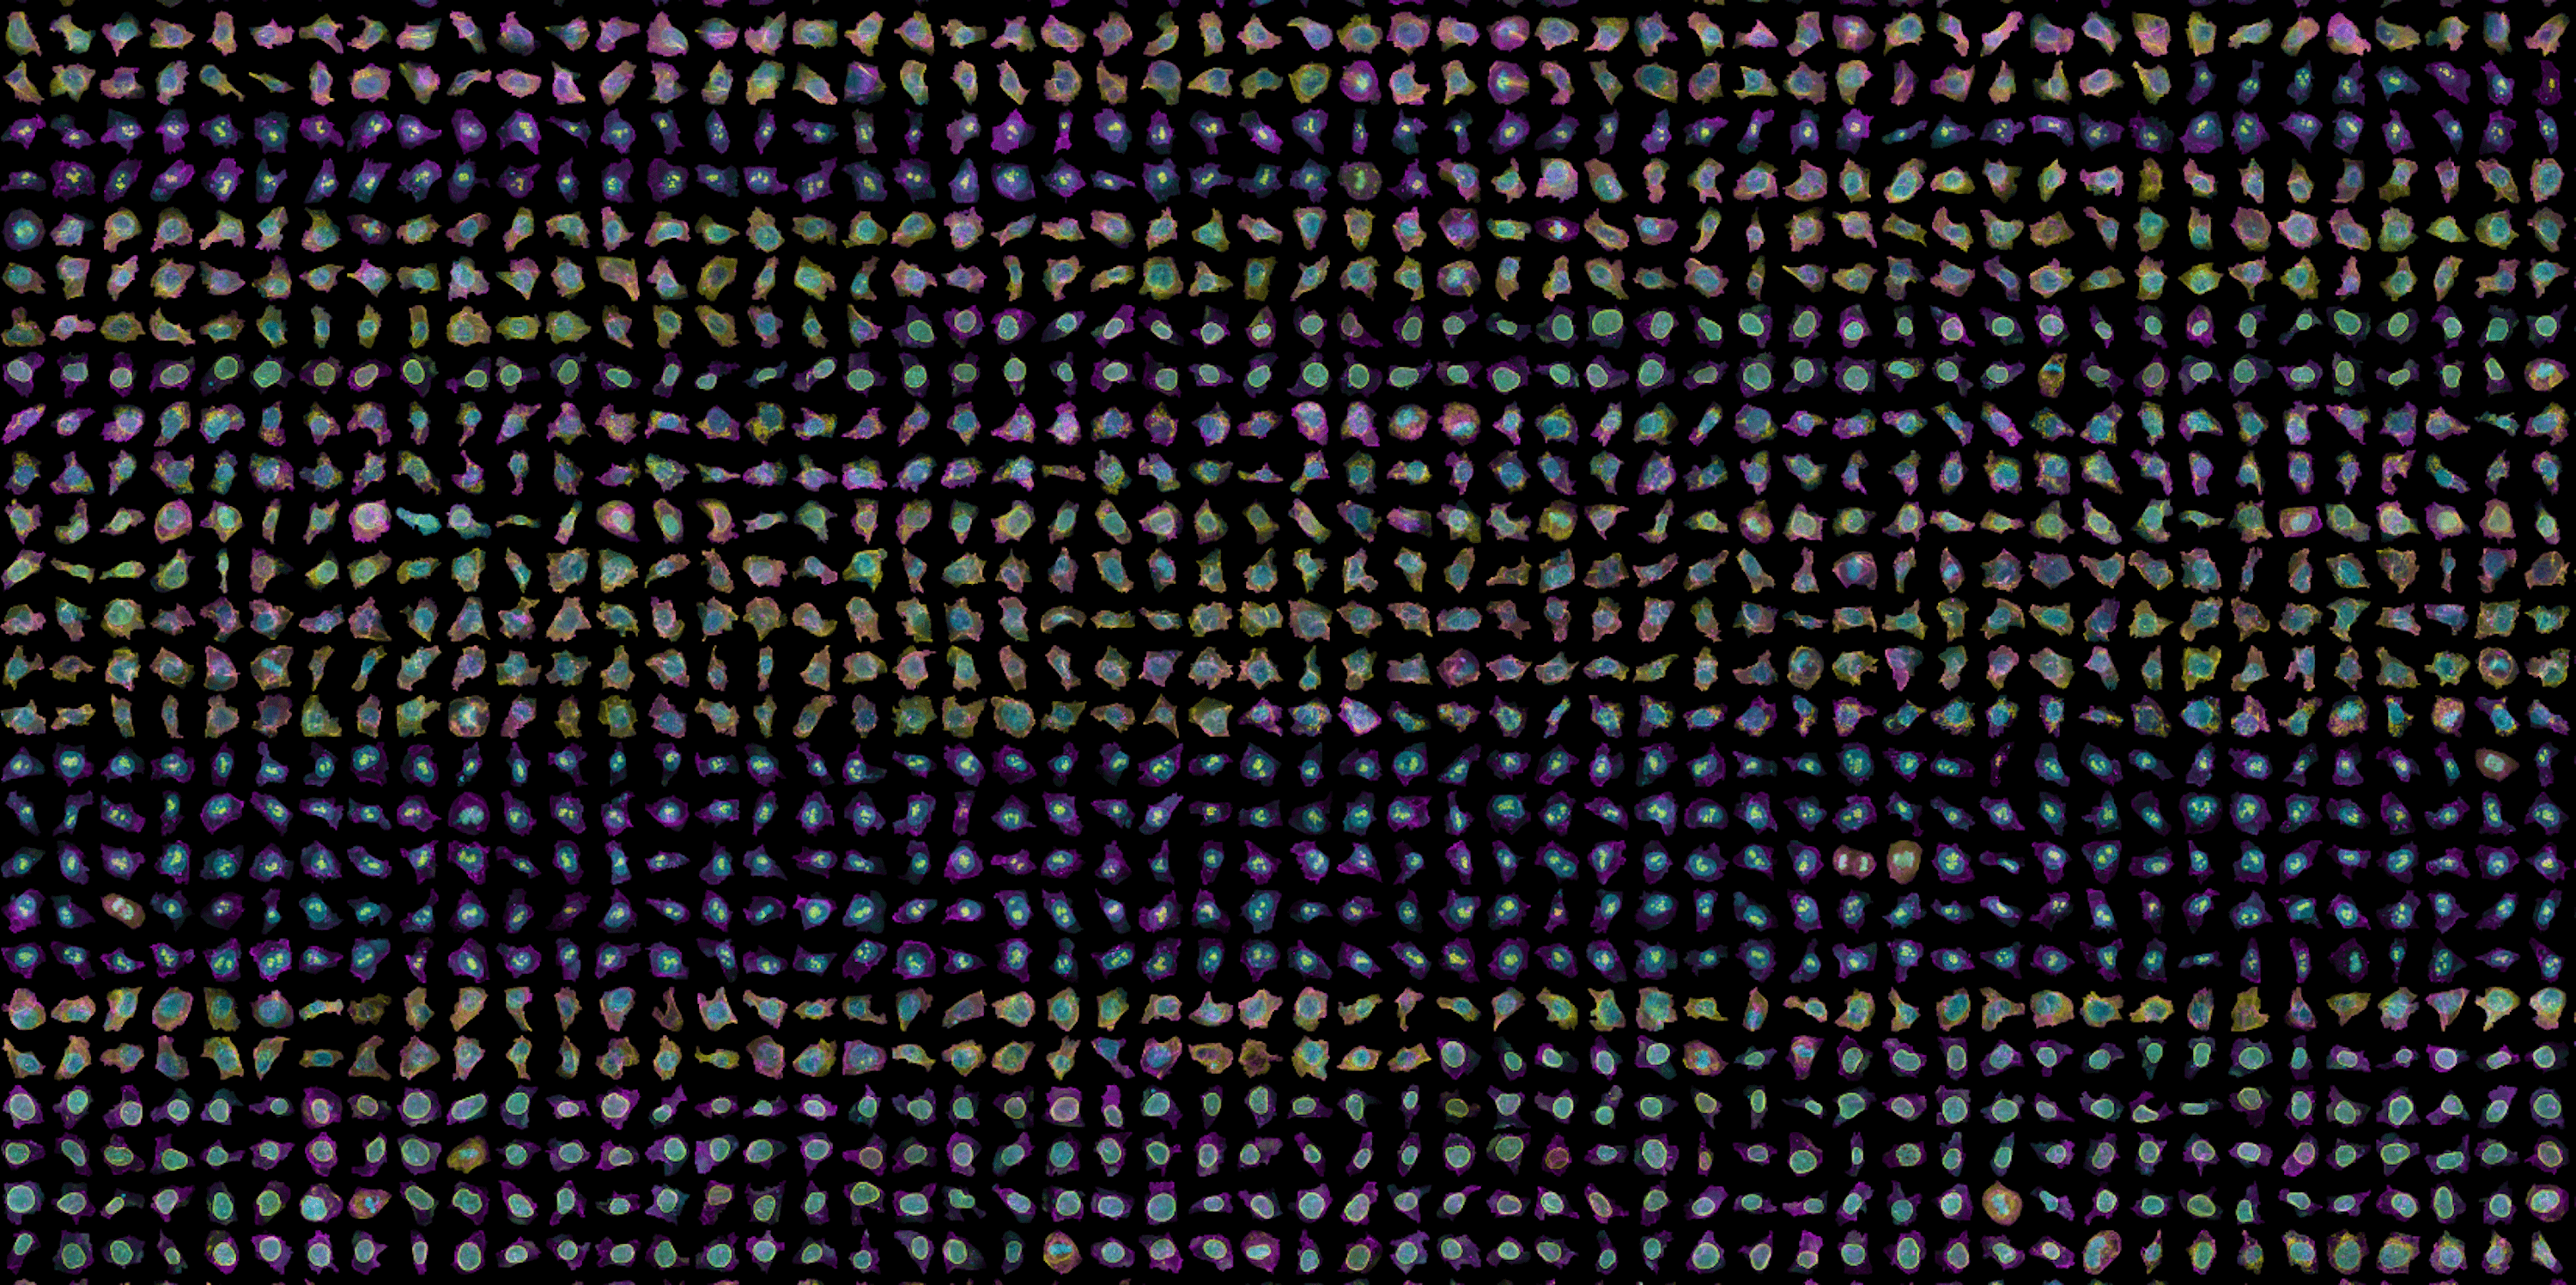 Hundreds of spinning cells against a black background